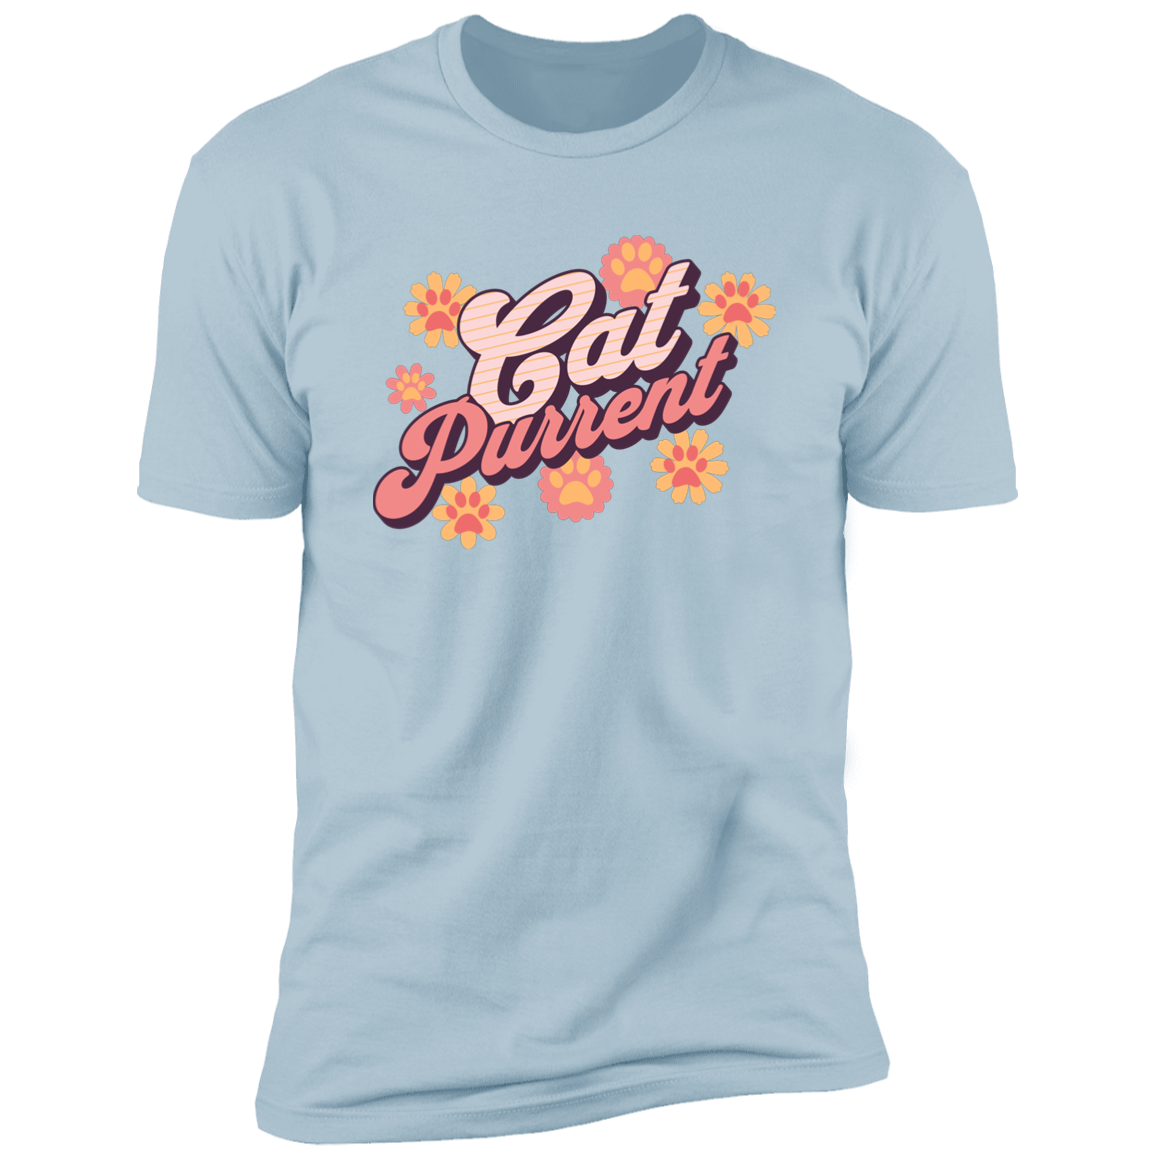 Cat Purrent Retro T-shirt, Cat Parent Shirt for humans, in light blue